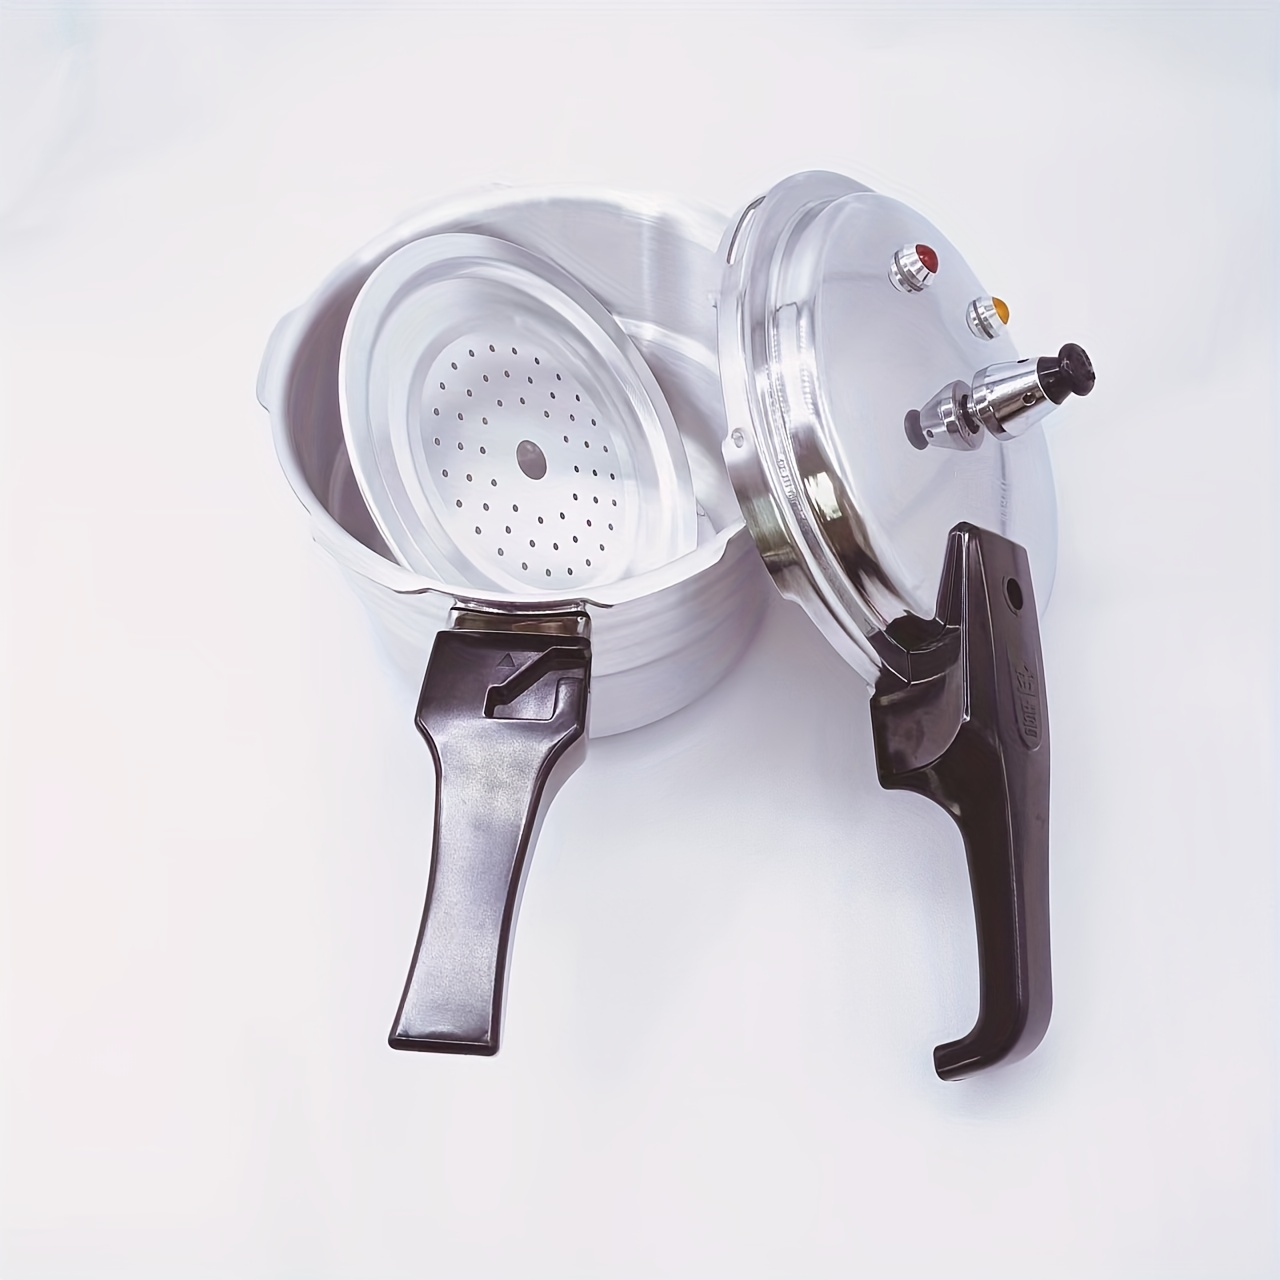 Aluminum Pressure Cooker Pressure Cooker Kitchen Pressure Pot High